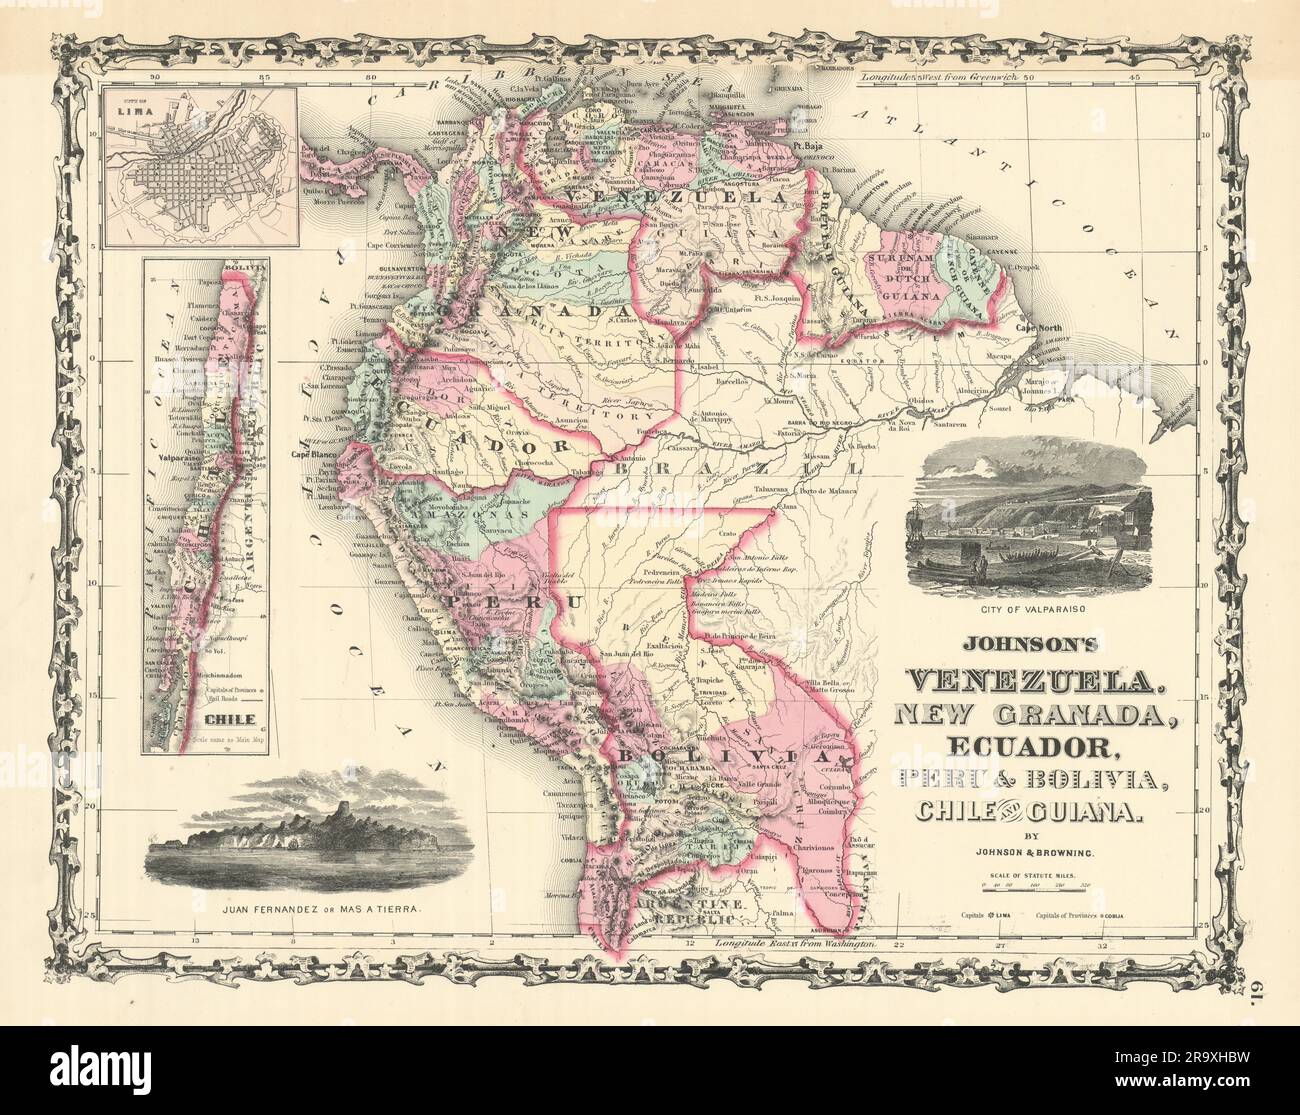 Johnson's Venezuela, New Granada, Ecuador, Peru, Bolivia, Chile, Guiana 1861 map Stock Photo